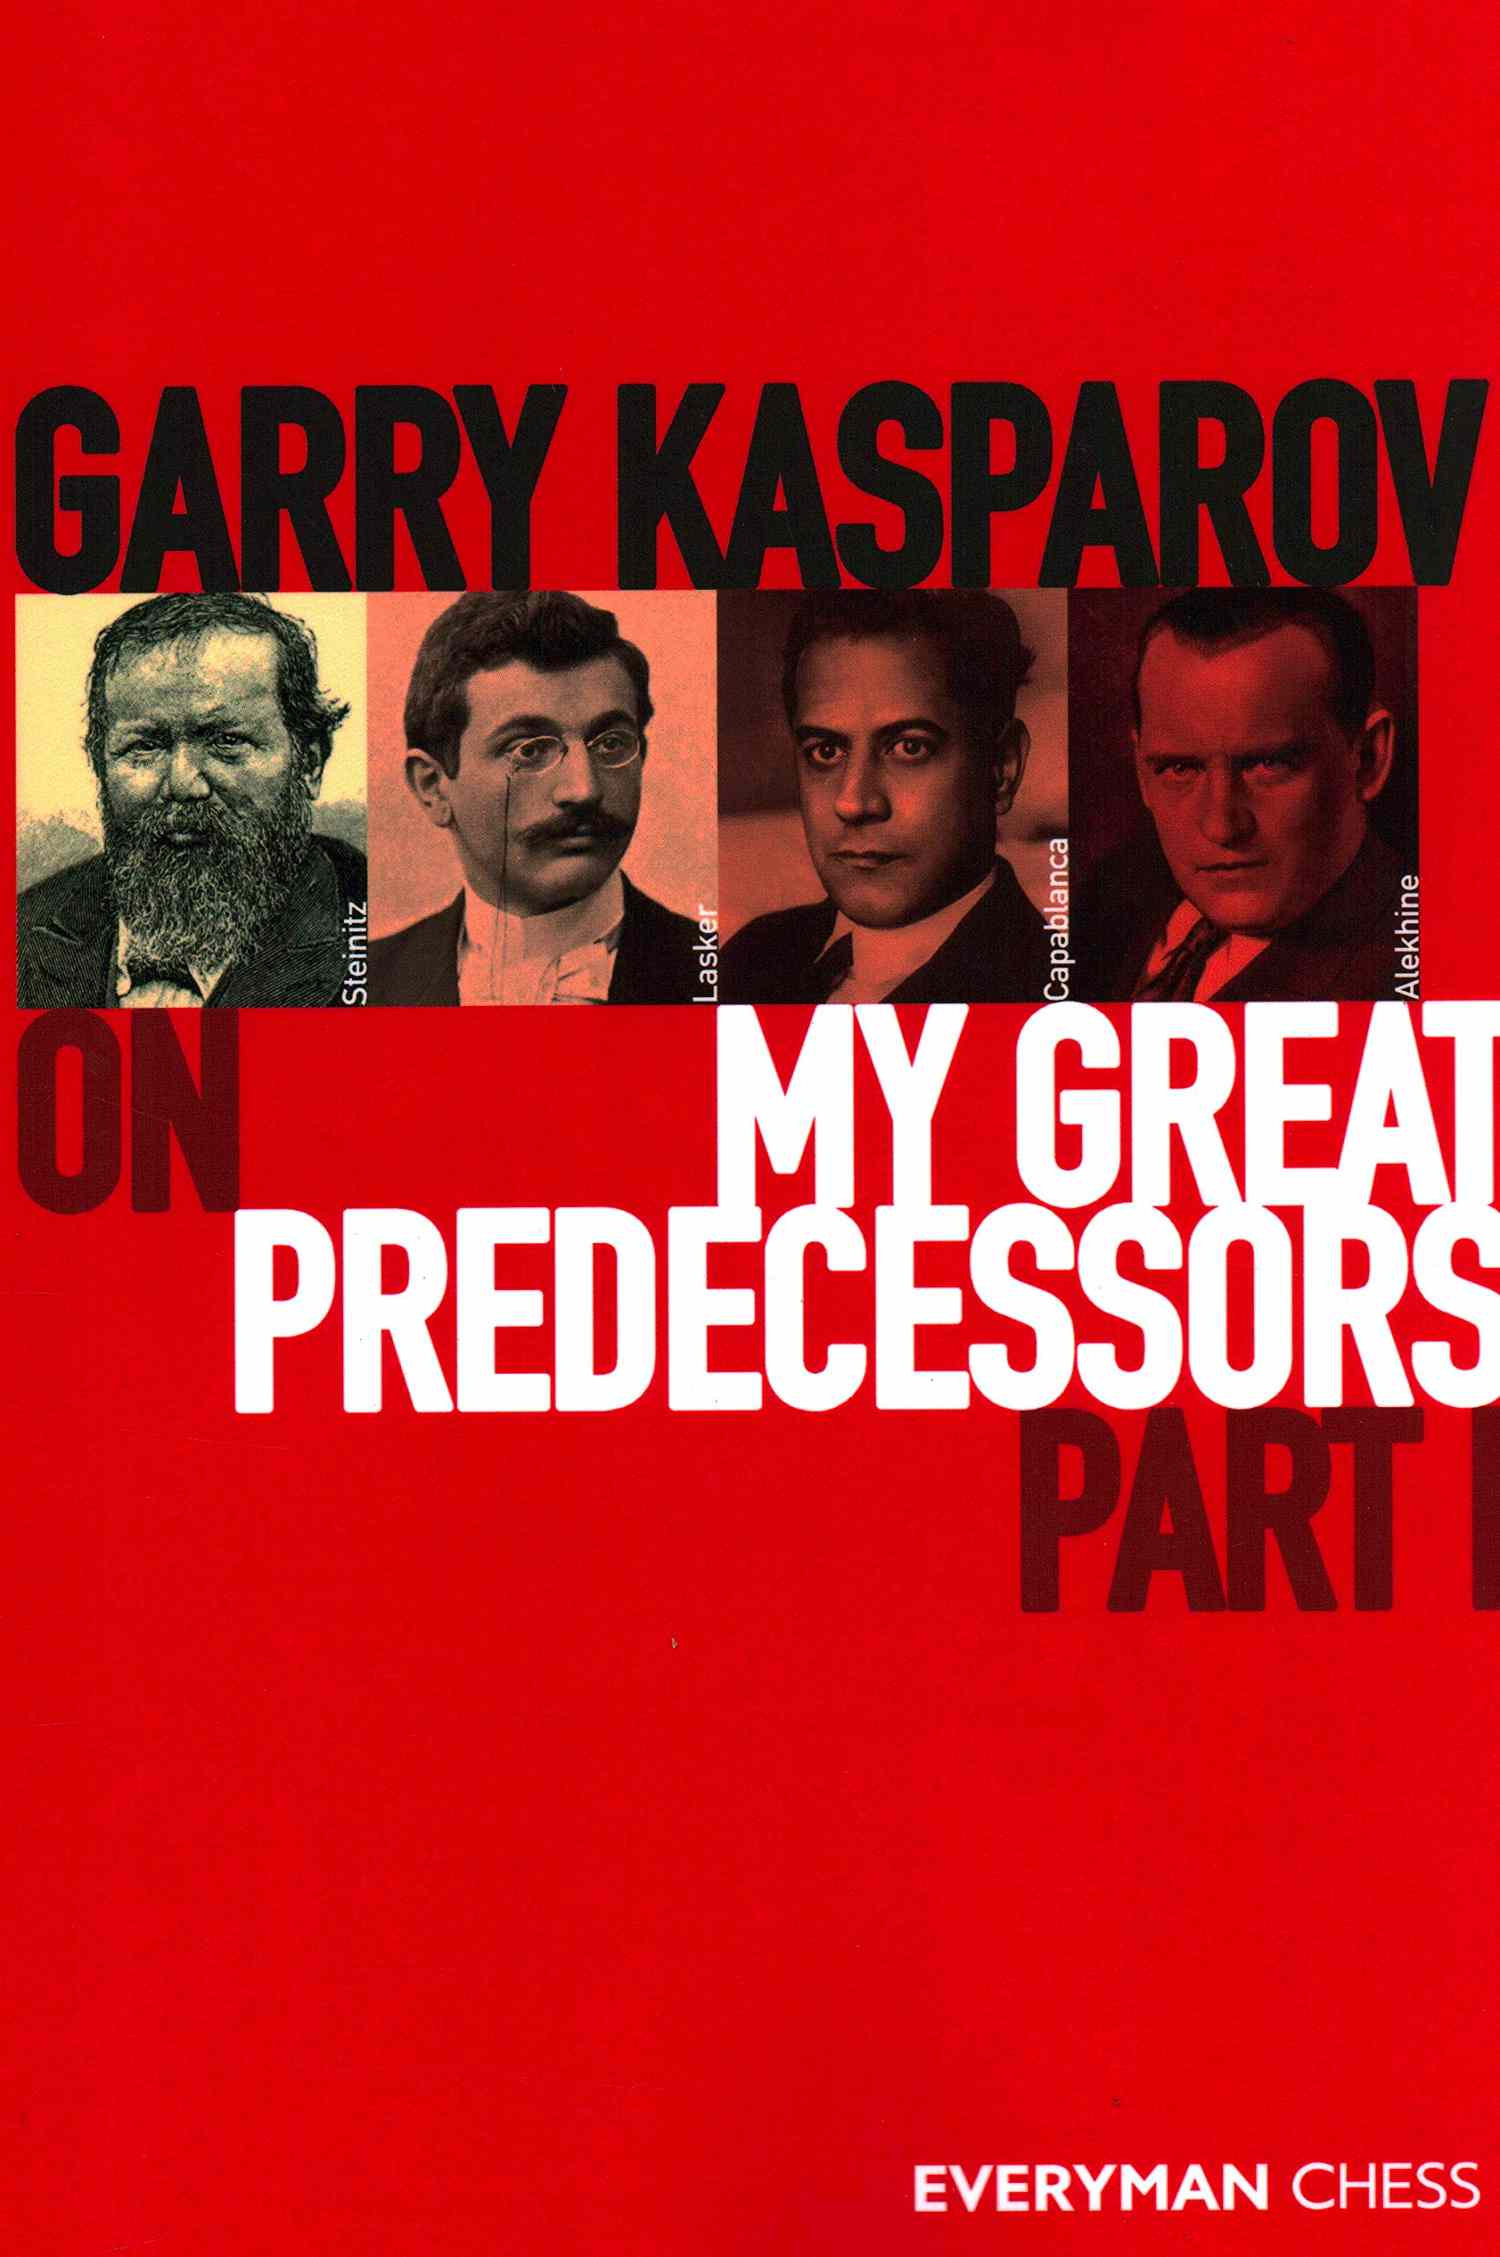 Garry Kasparov on My Great Predecessors, Part 1 by Garry Kasparov